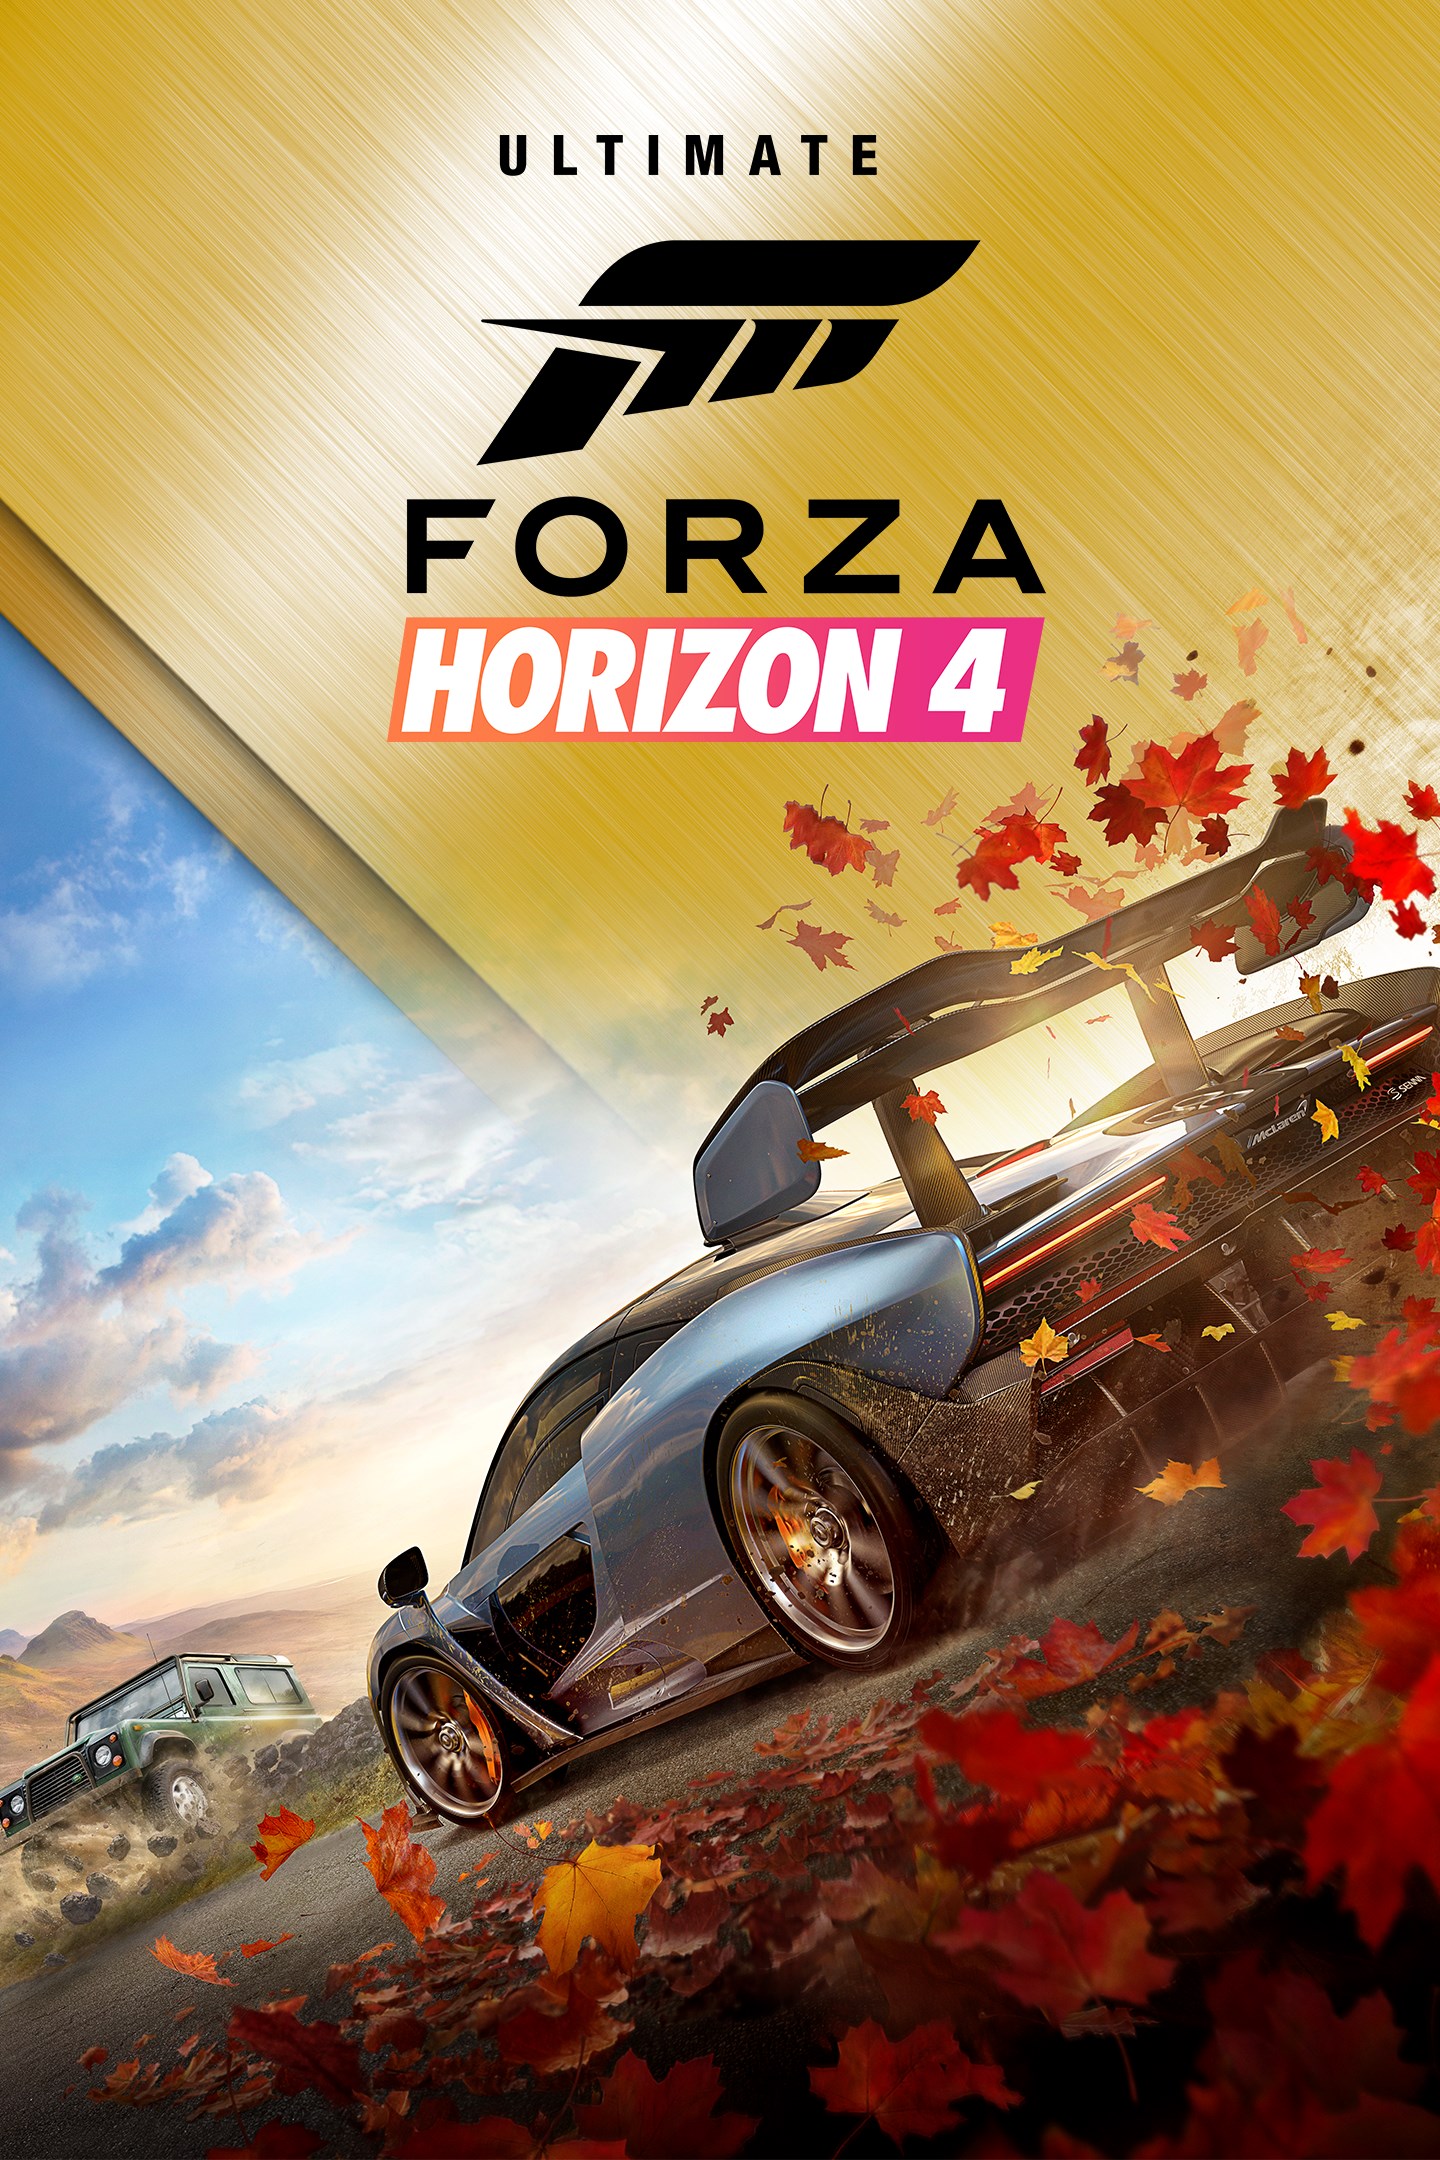 Forza Horizon 4 Ultimate Edition box shot